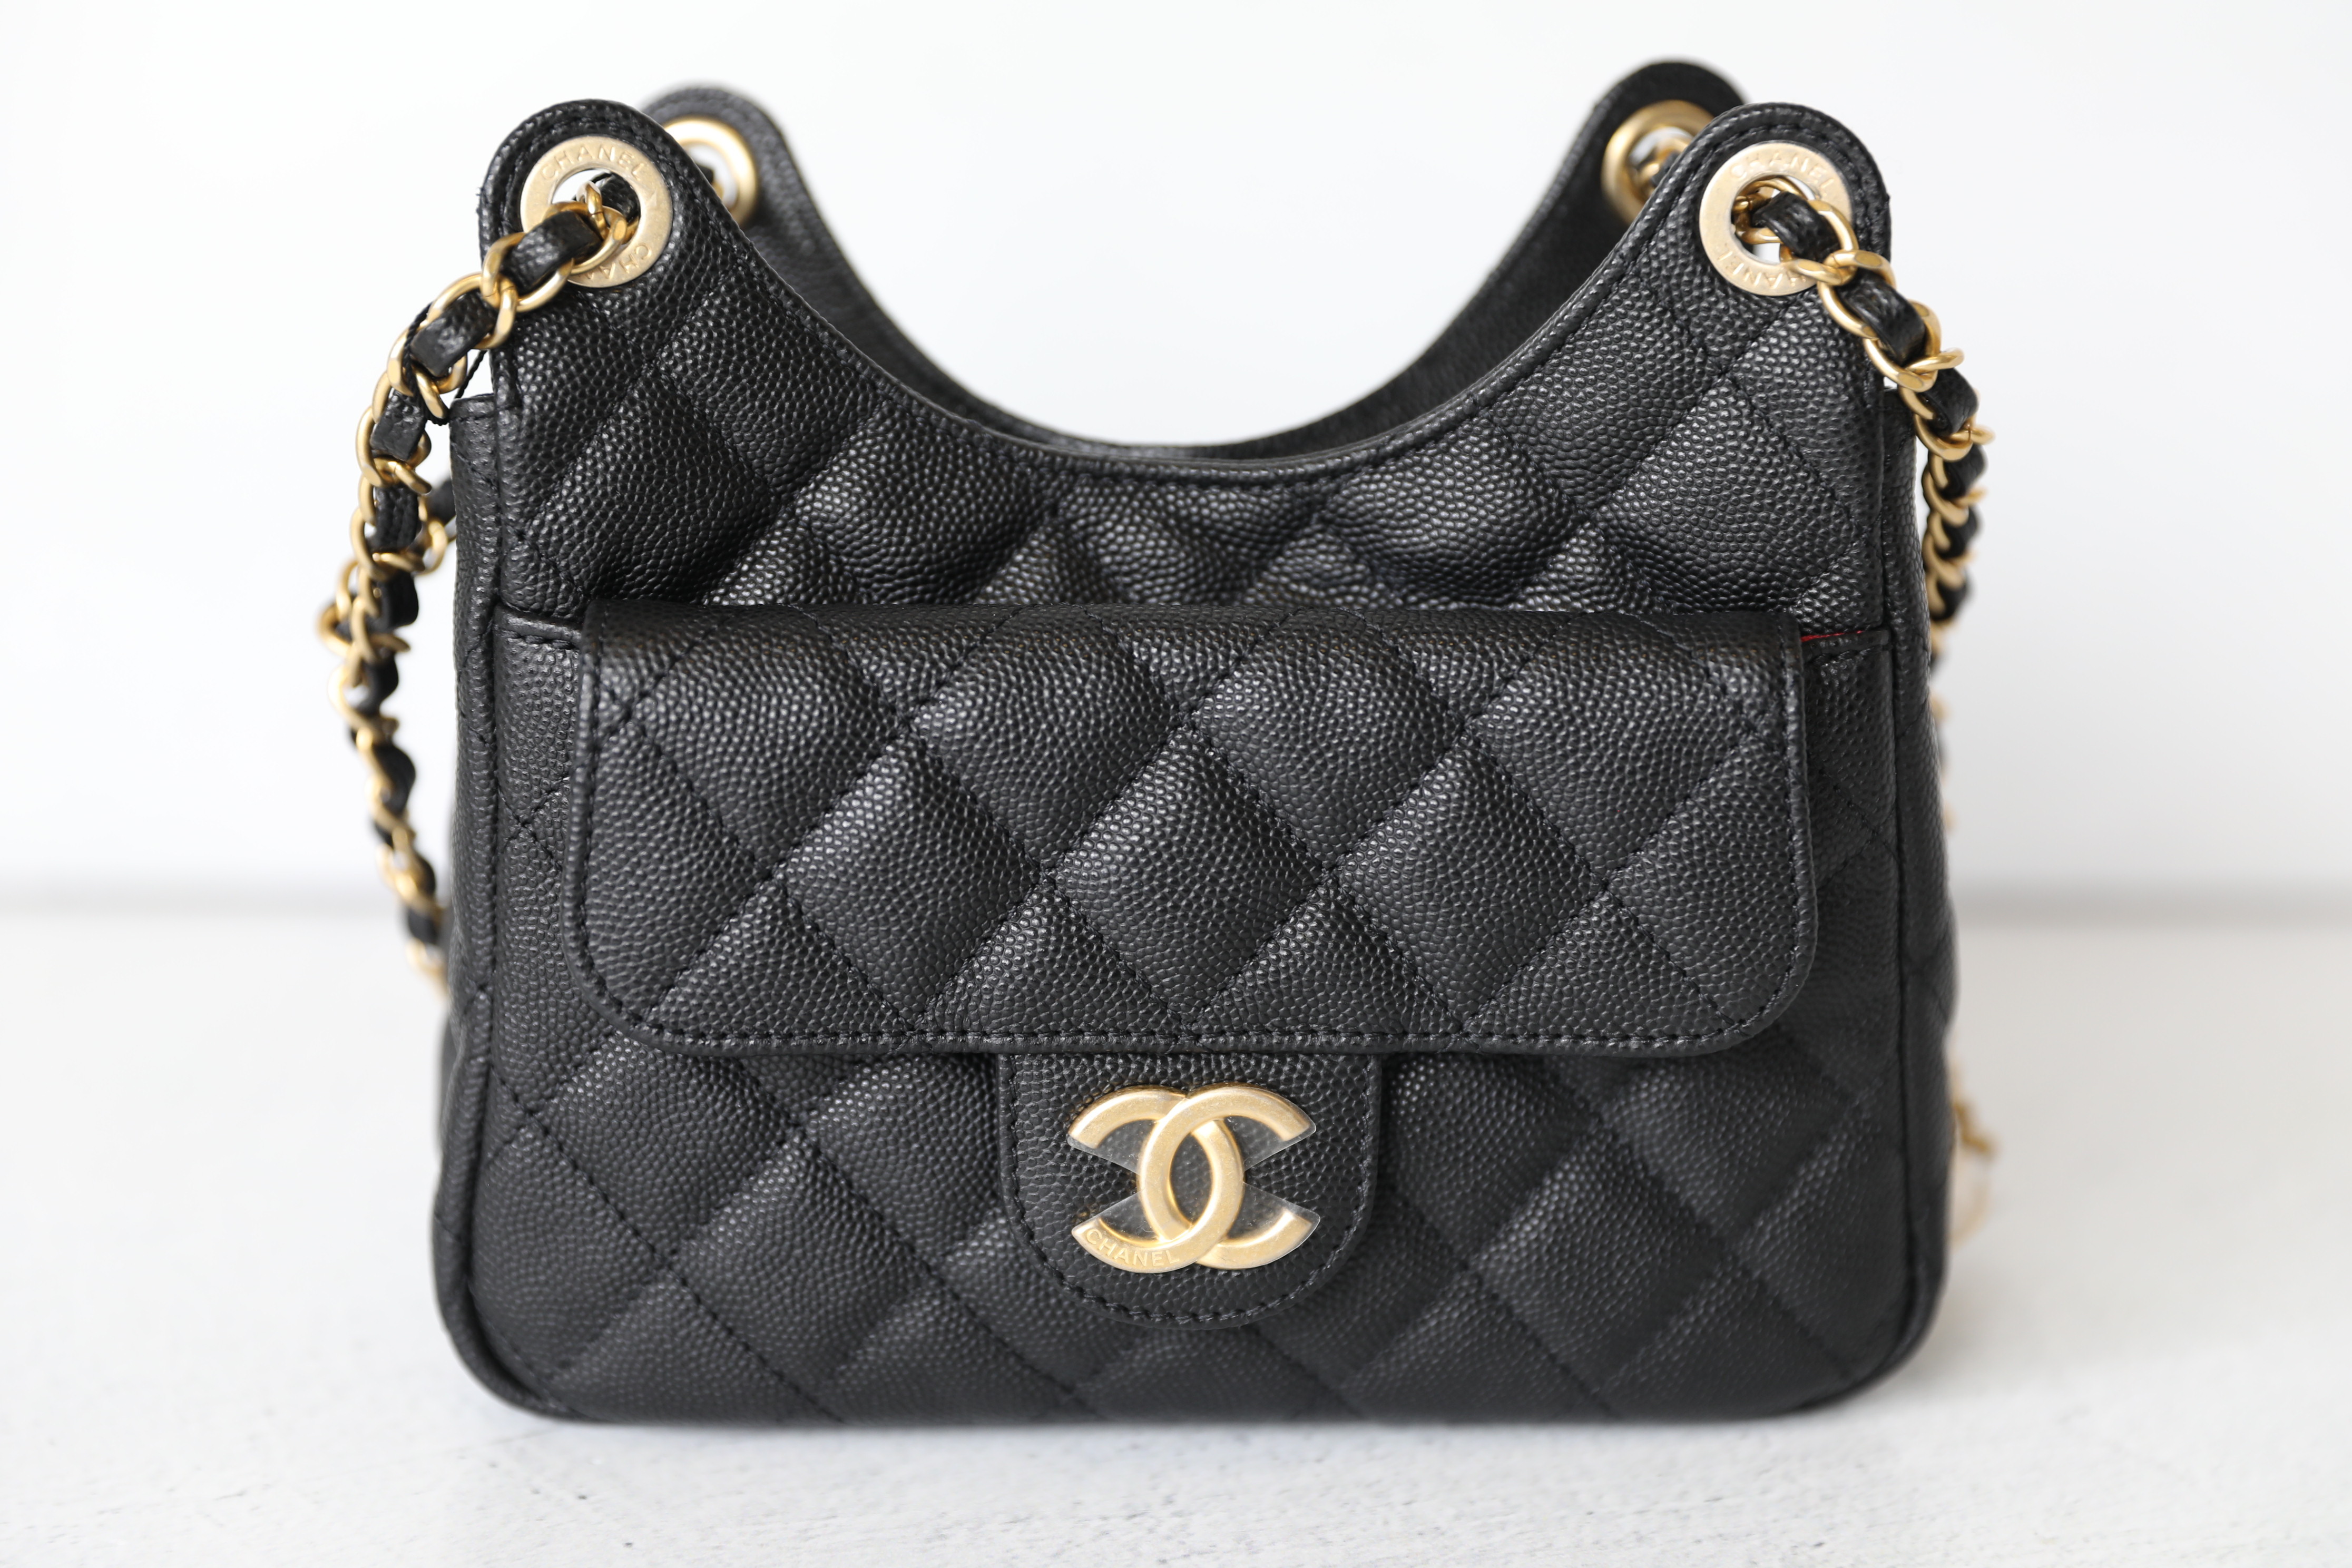 Chanel Hobo Bag Small, Black Caviar Leather with Gold Hardware, New in Box  WA001 - Julia Rose Boston